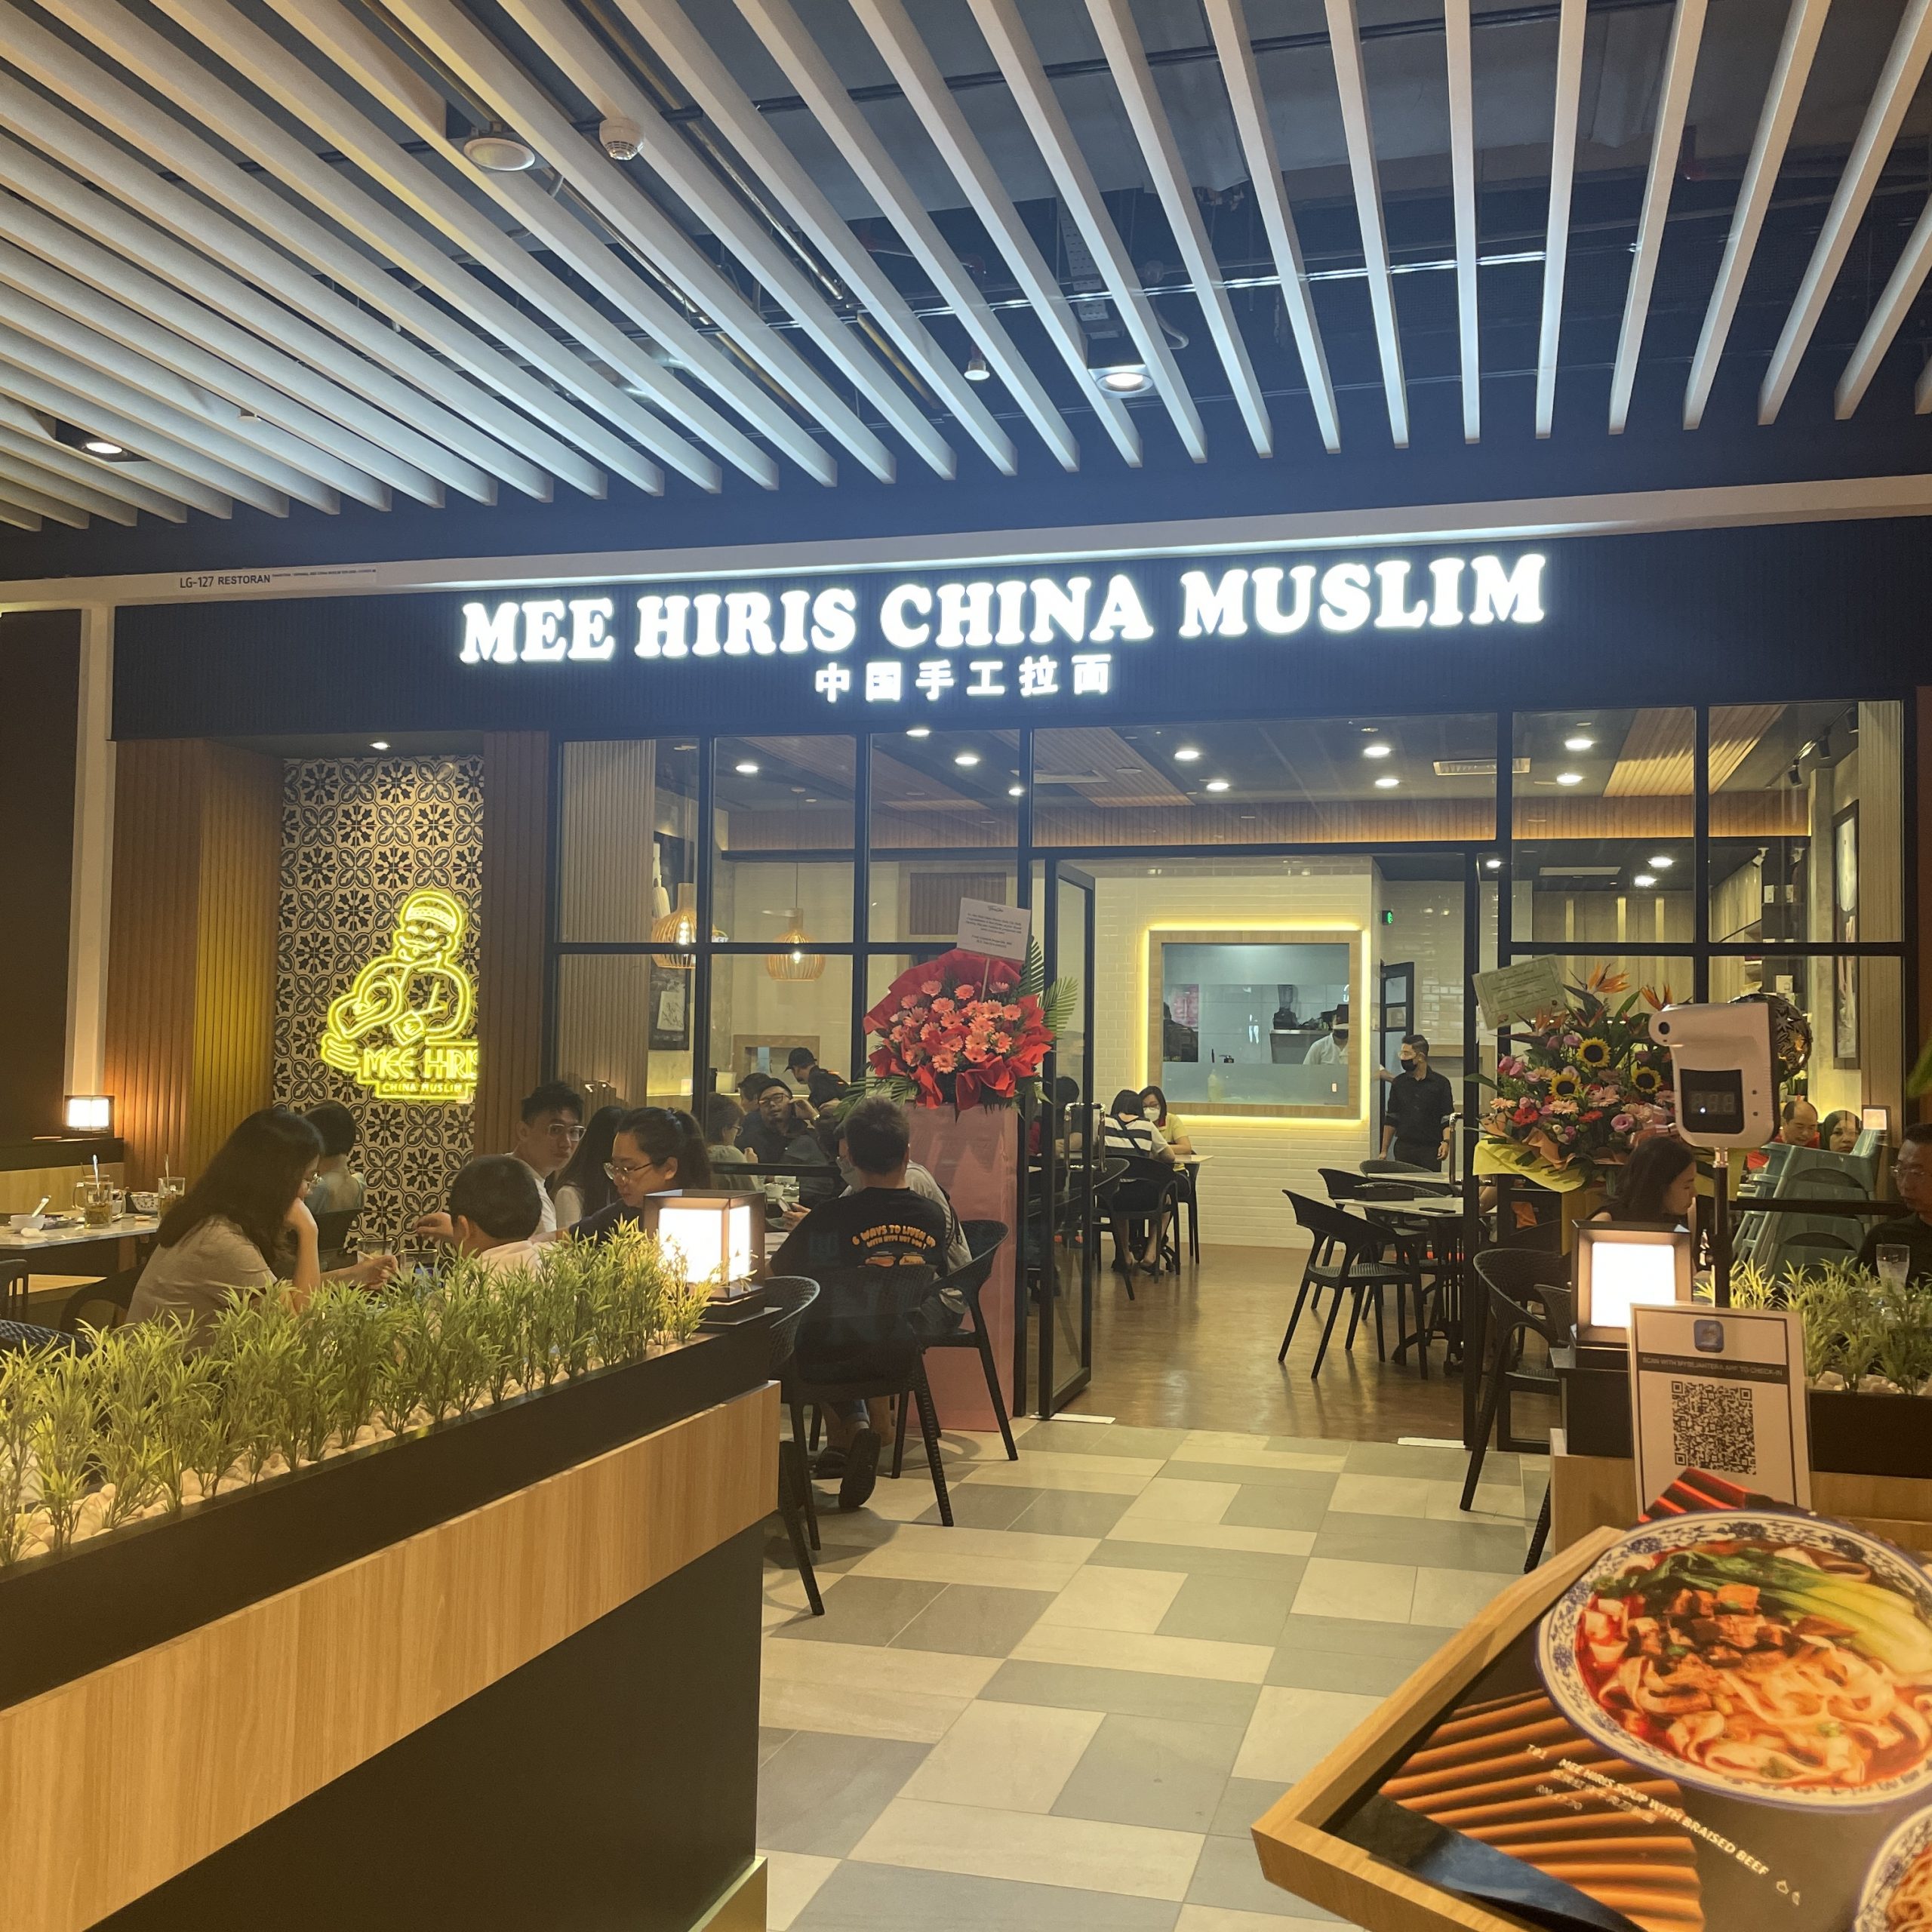 Mee hiris china muslim menu